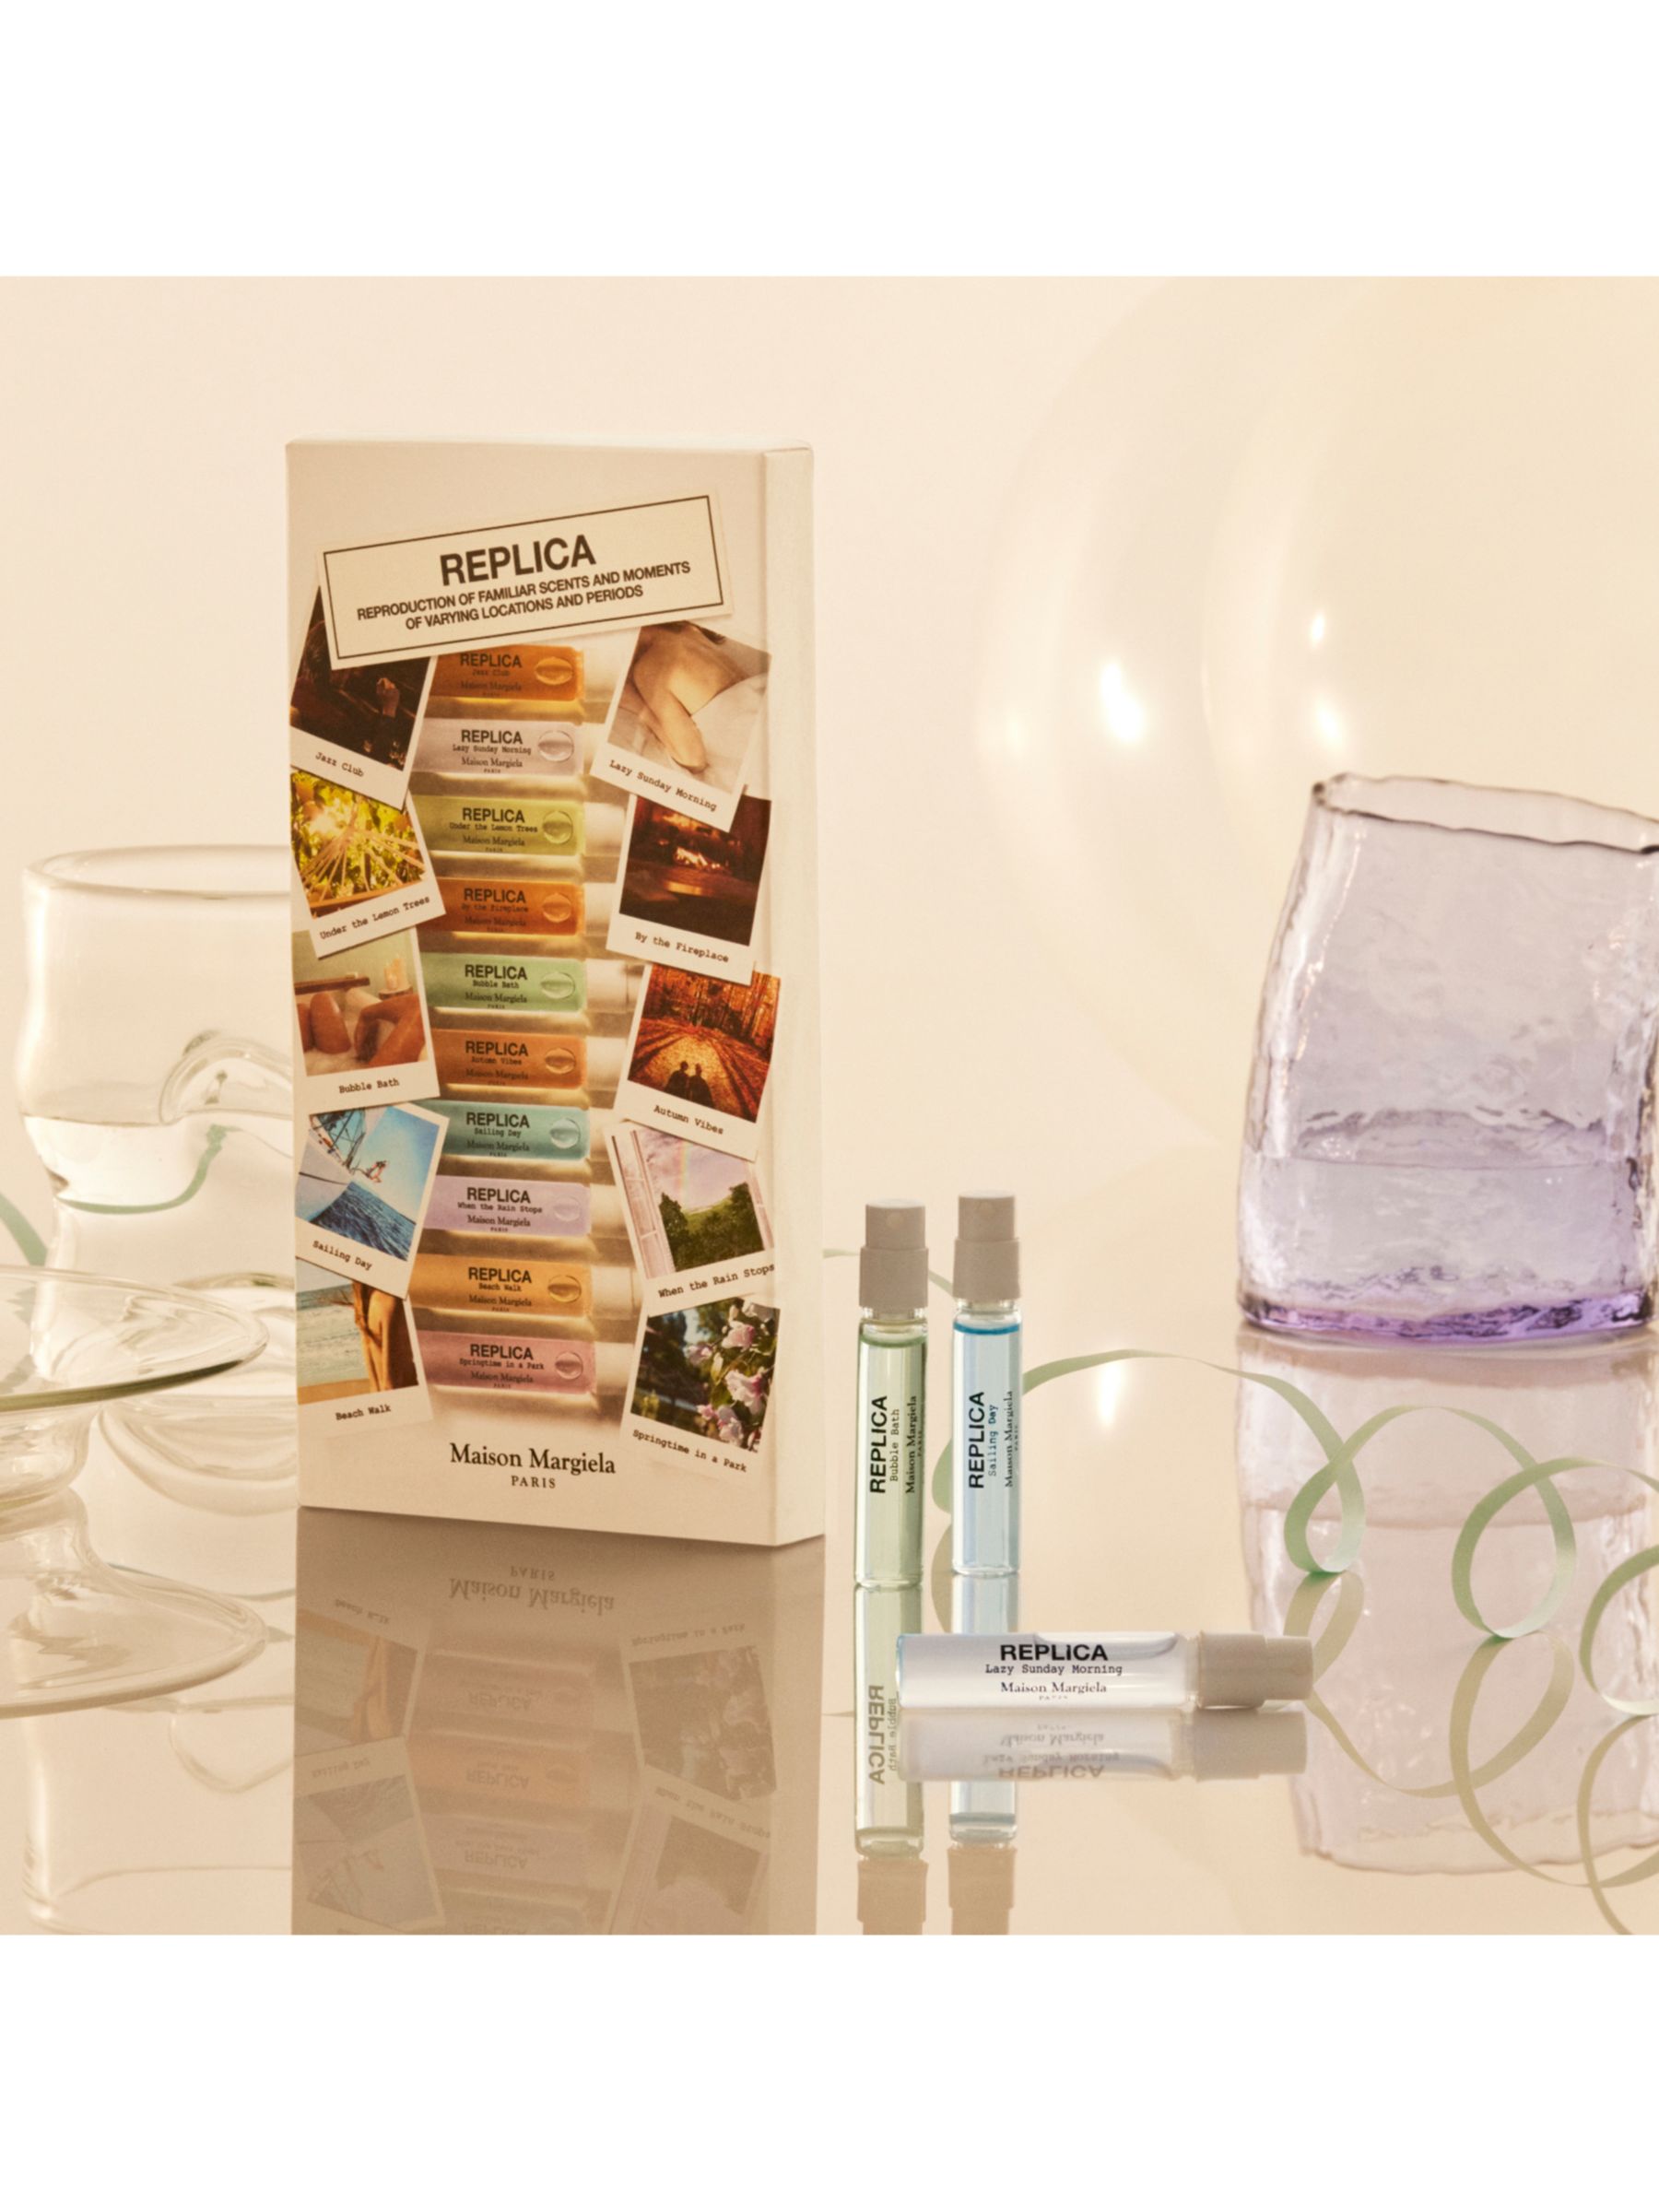 Maison Margiela Replica Memory Box Fragrance Discovery Gift Set